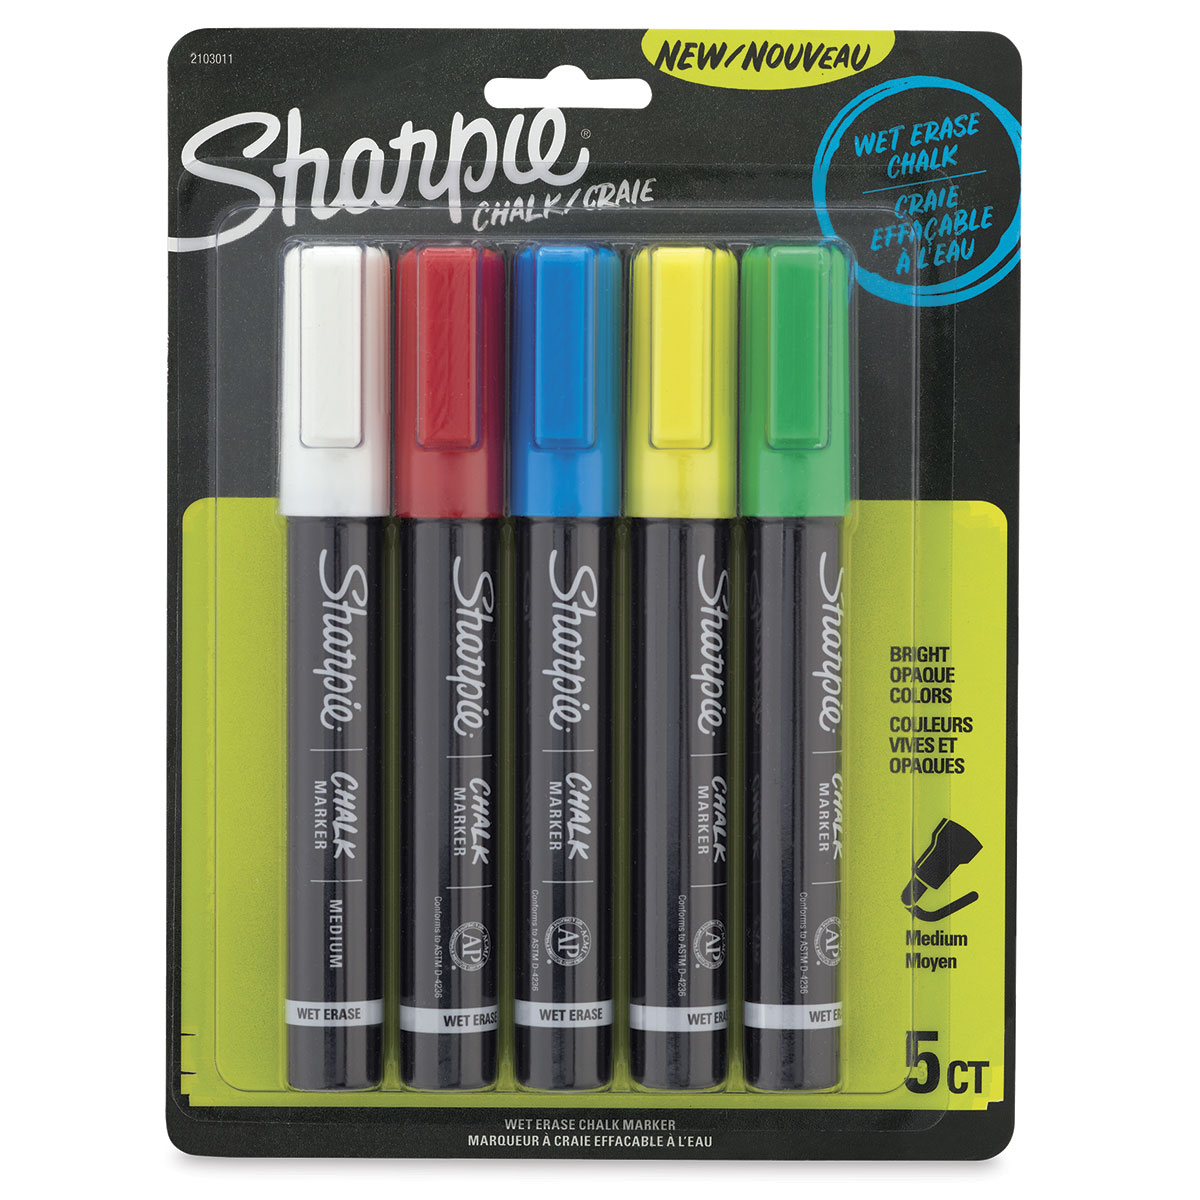 Sharpie Chalk Markers - White, Set of 2